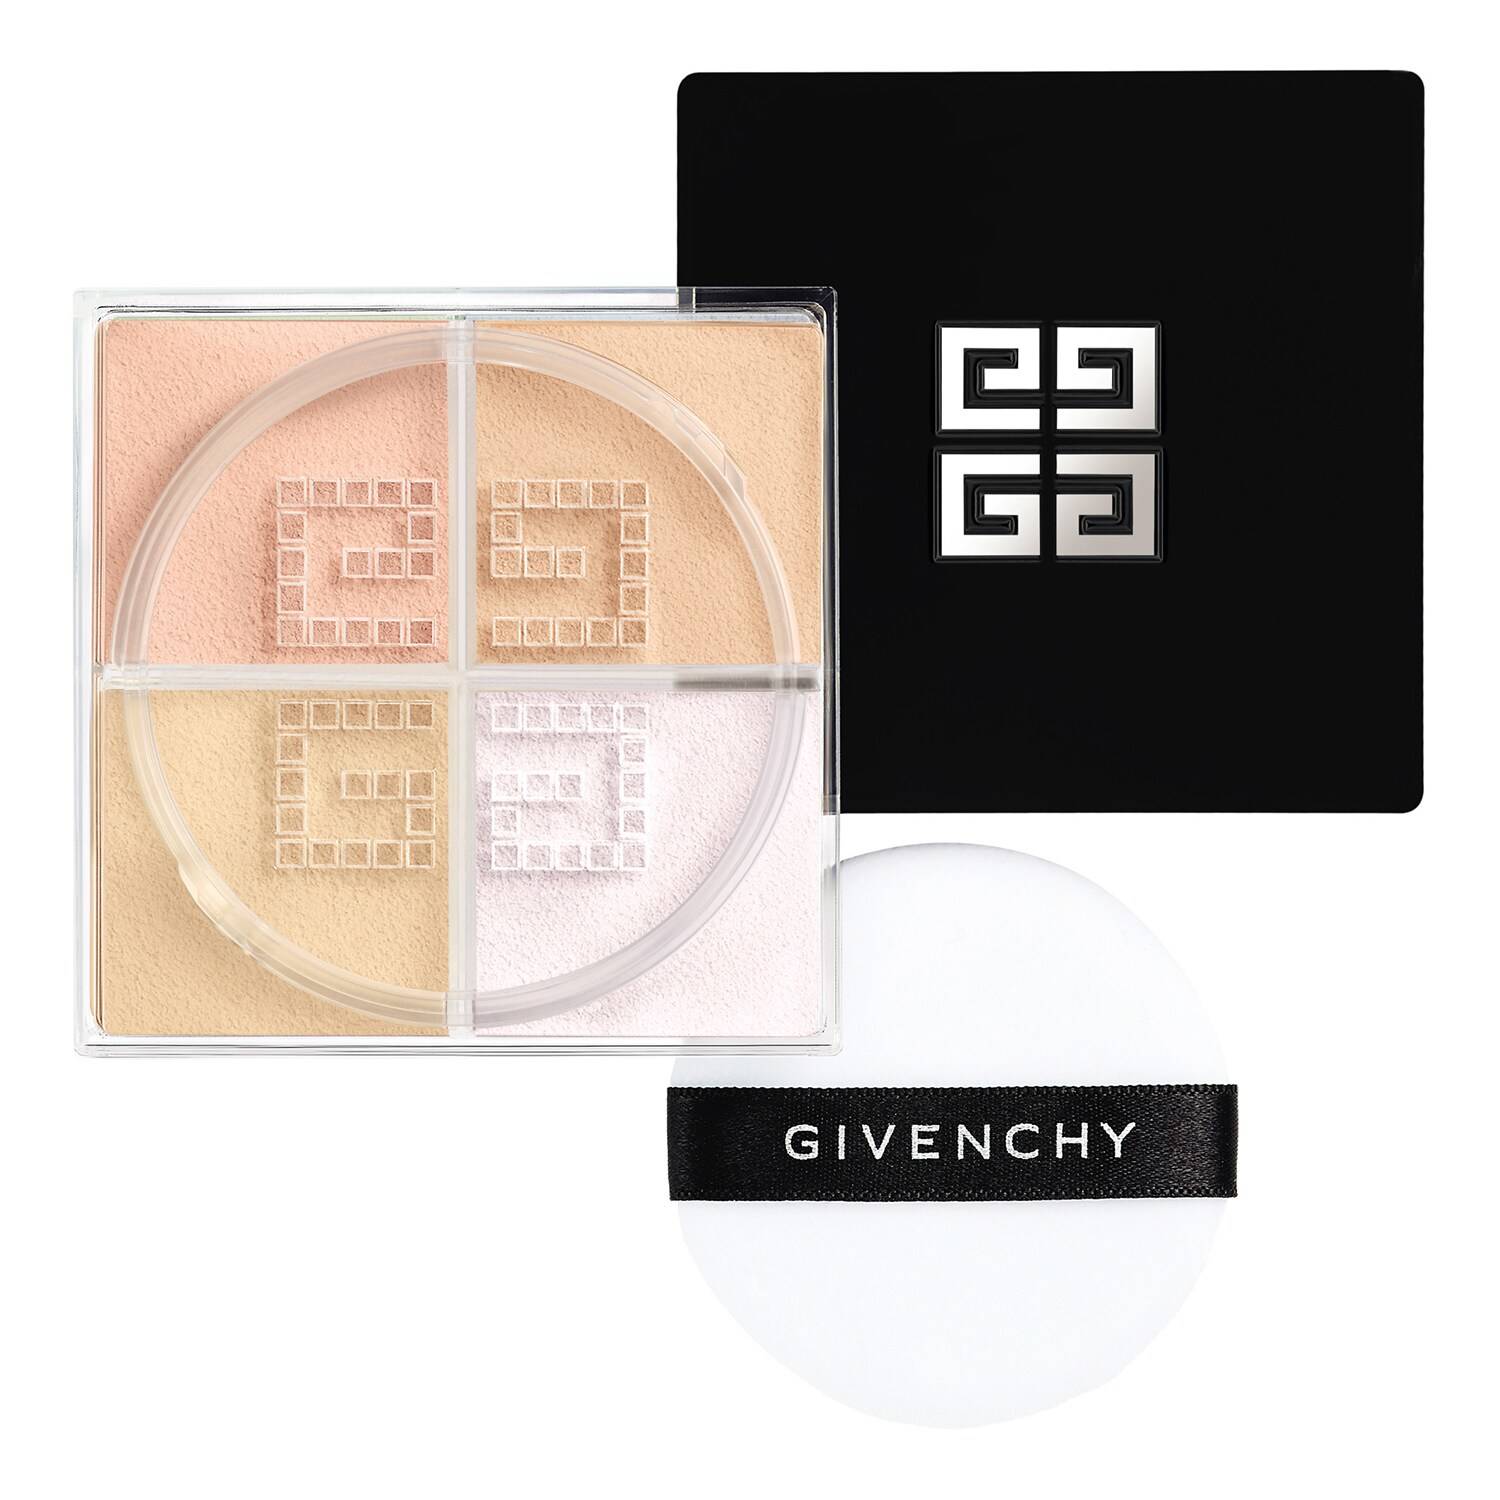 Givenchy Prisme Libre Mini 4-Color Loose Powder Mini 4G - Sephora Exclusive Ndeg2 - Satin Blanc